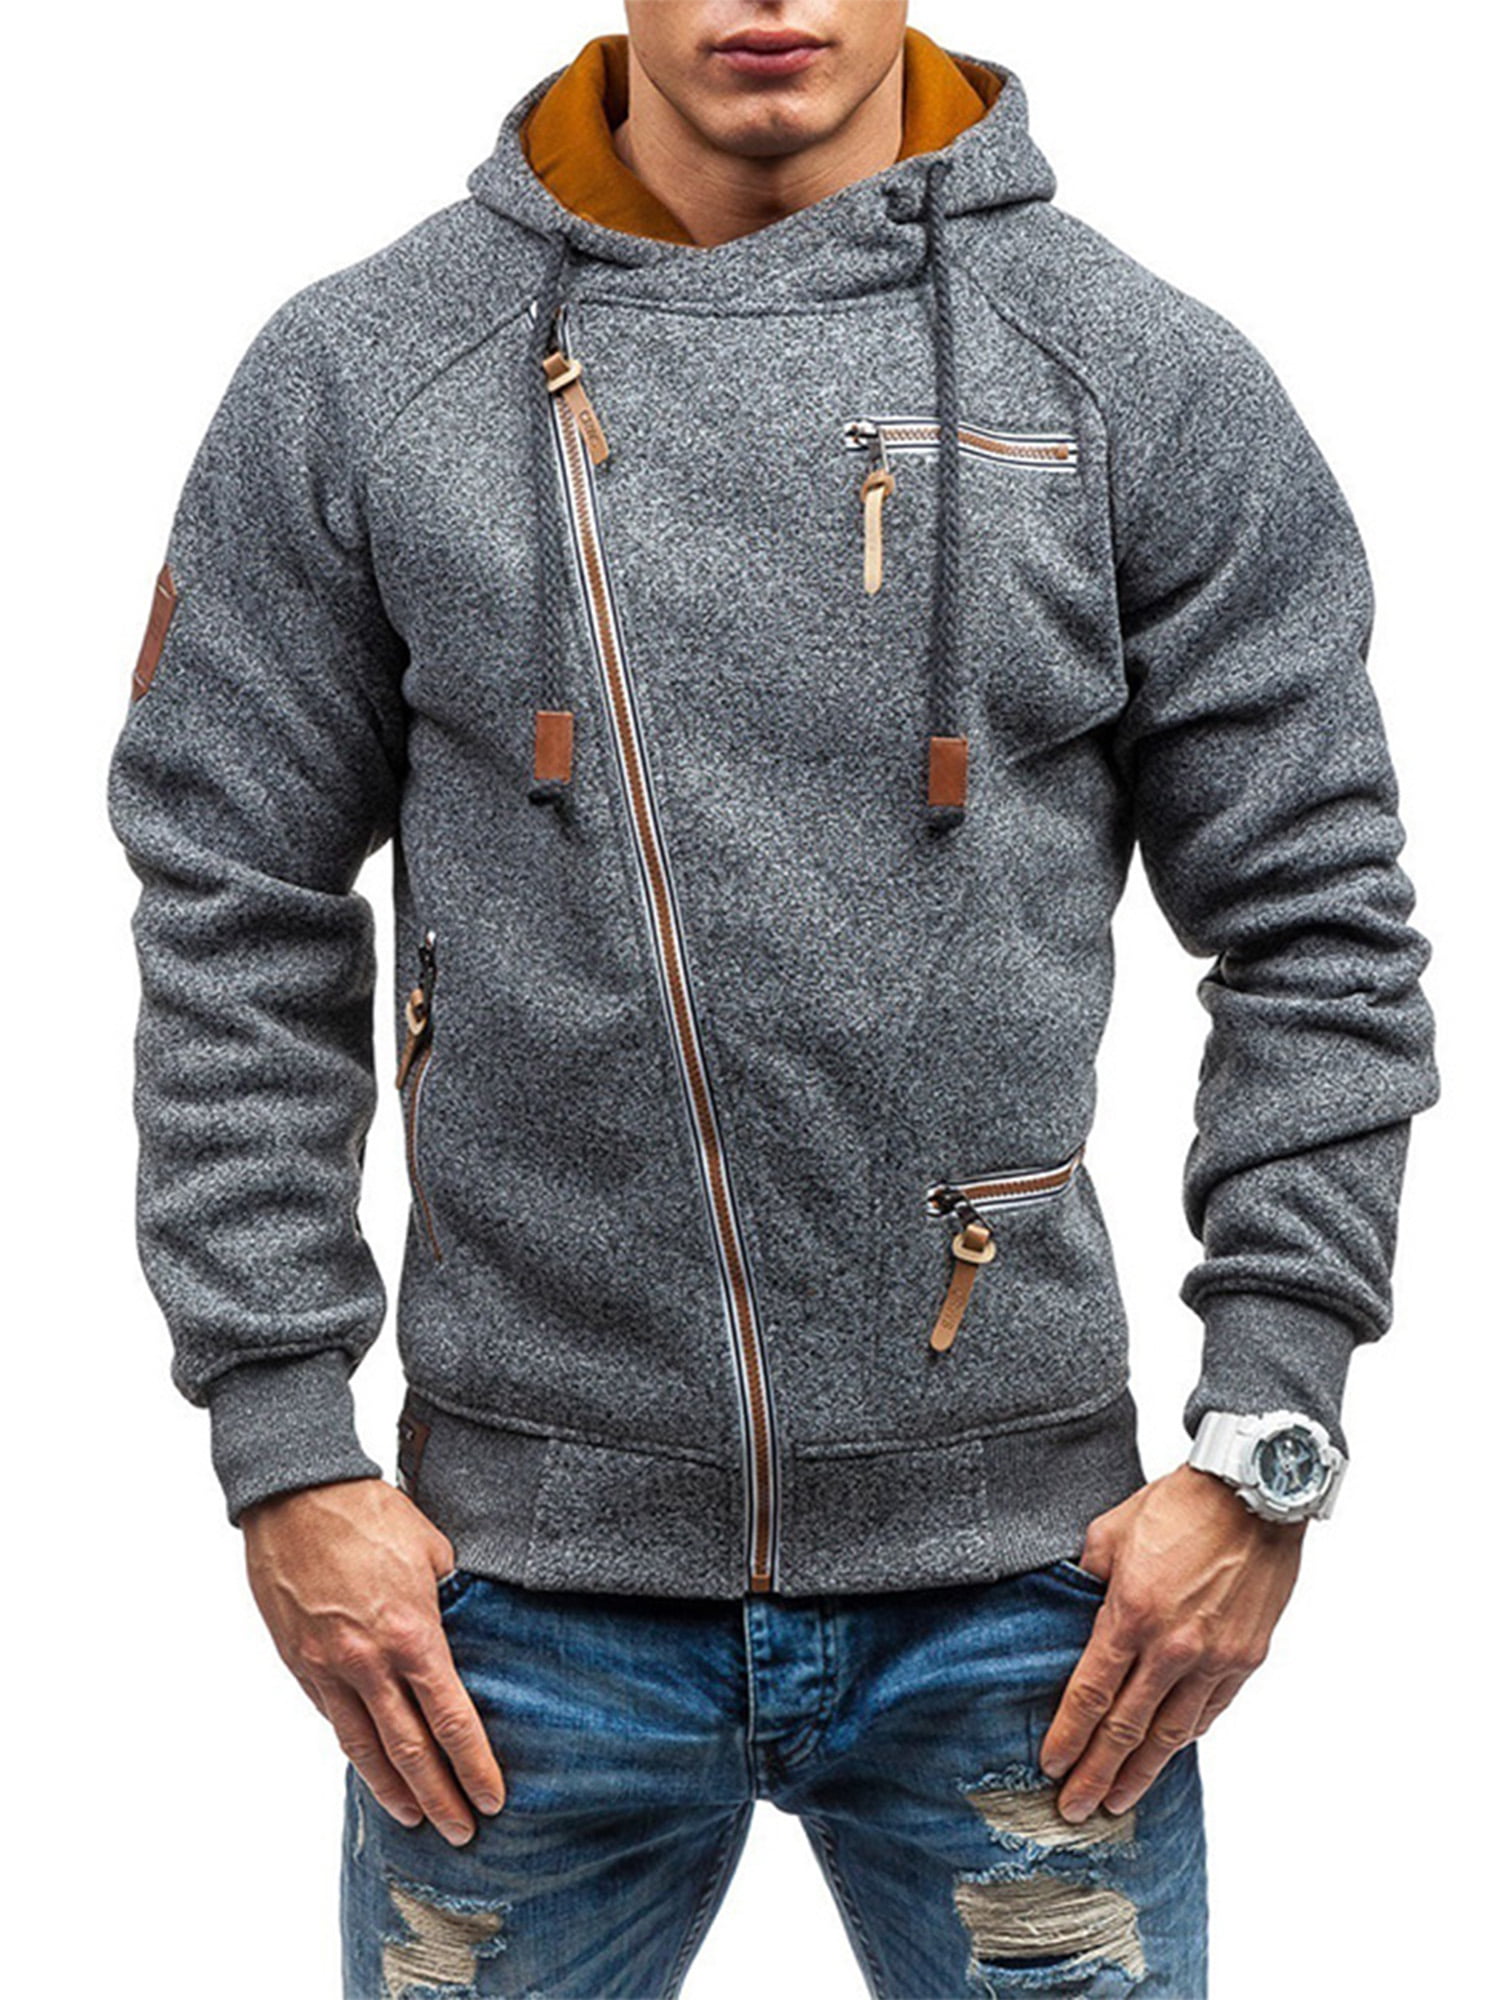 Longra Mens Solid Long Sleeve Pullover Casual Zipper Sweatshirt Hoodie Coat Autumn Winter Fashion Tops